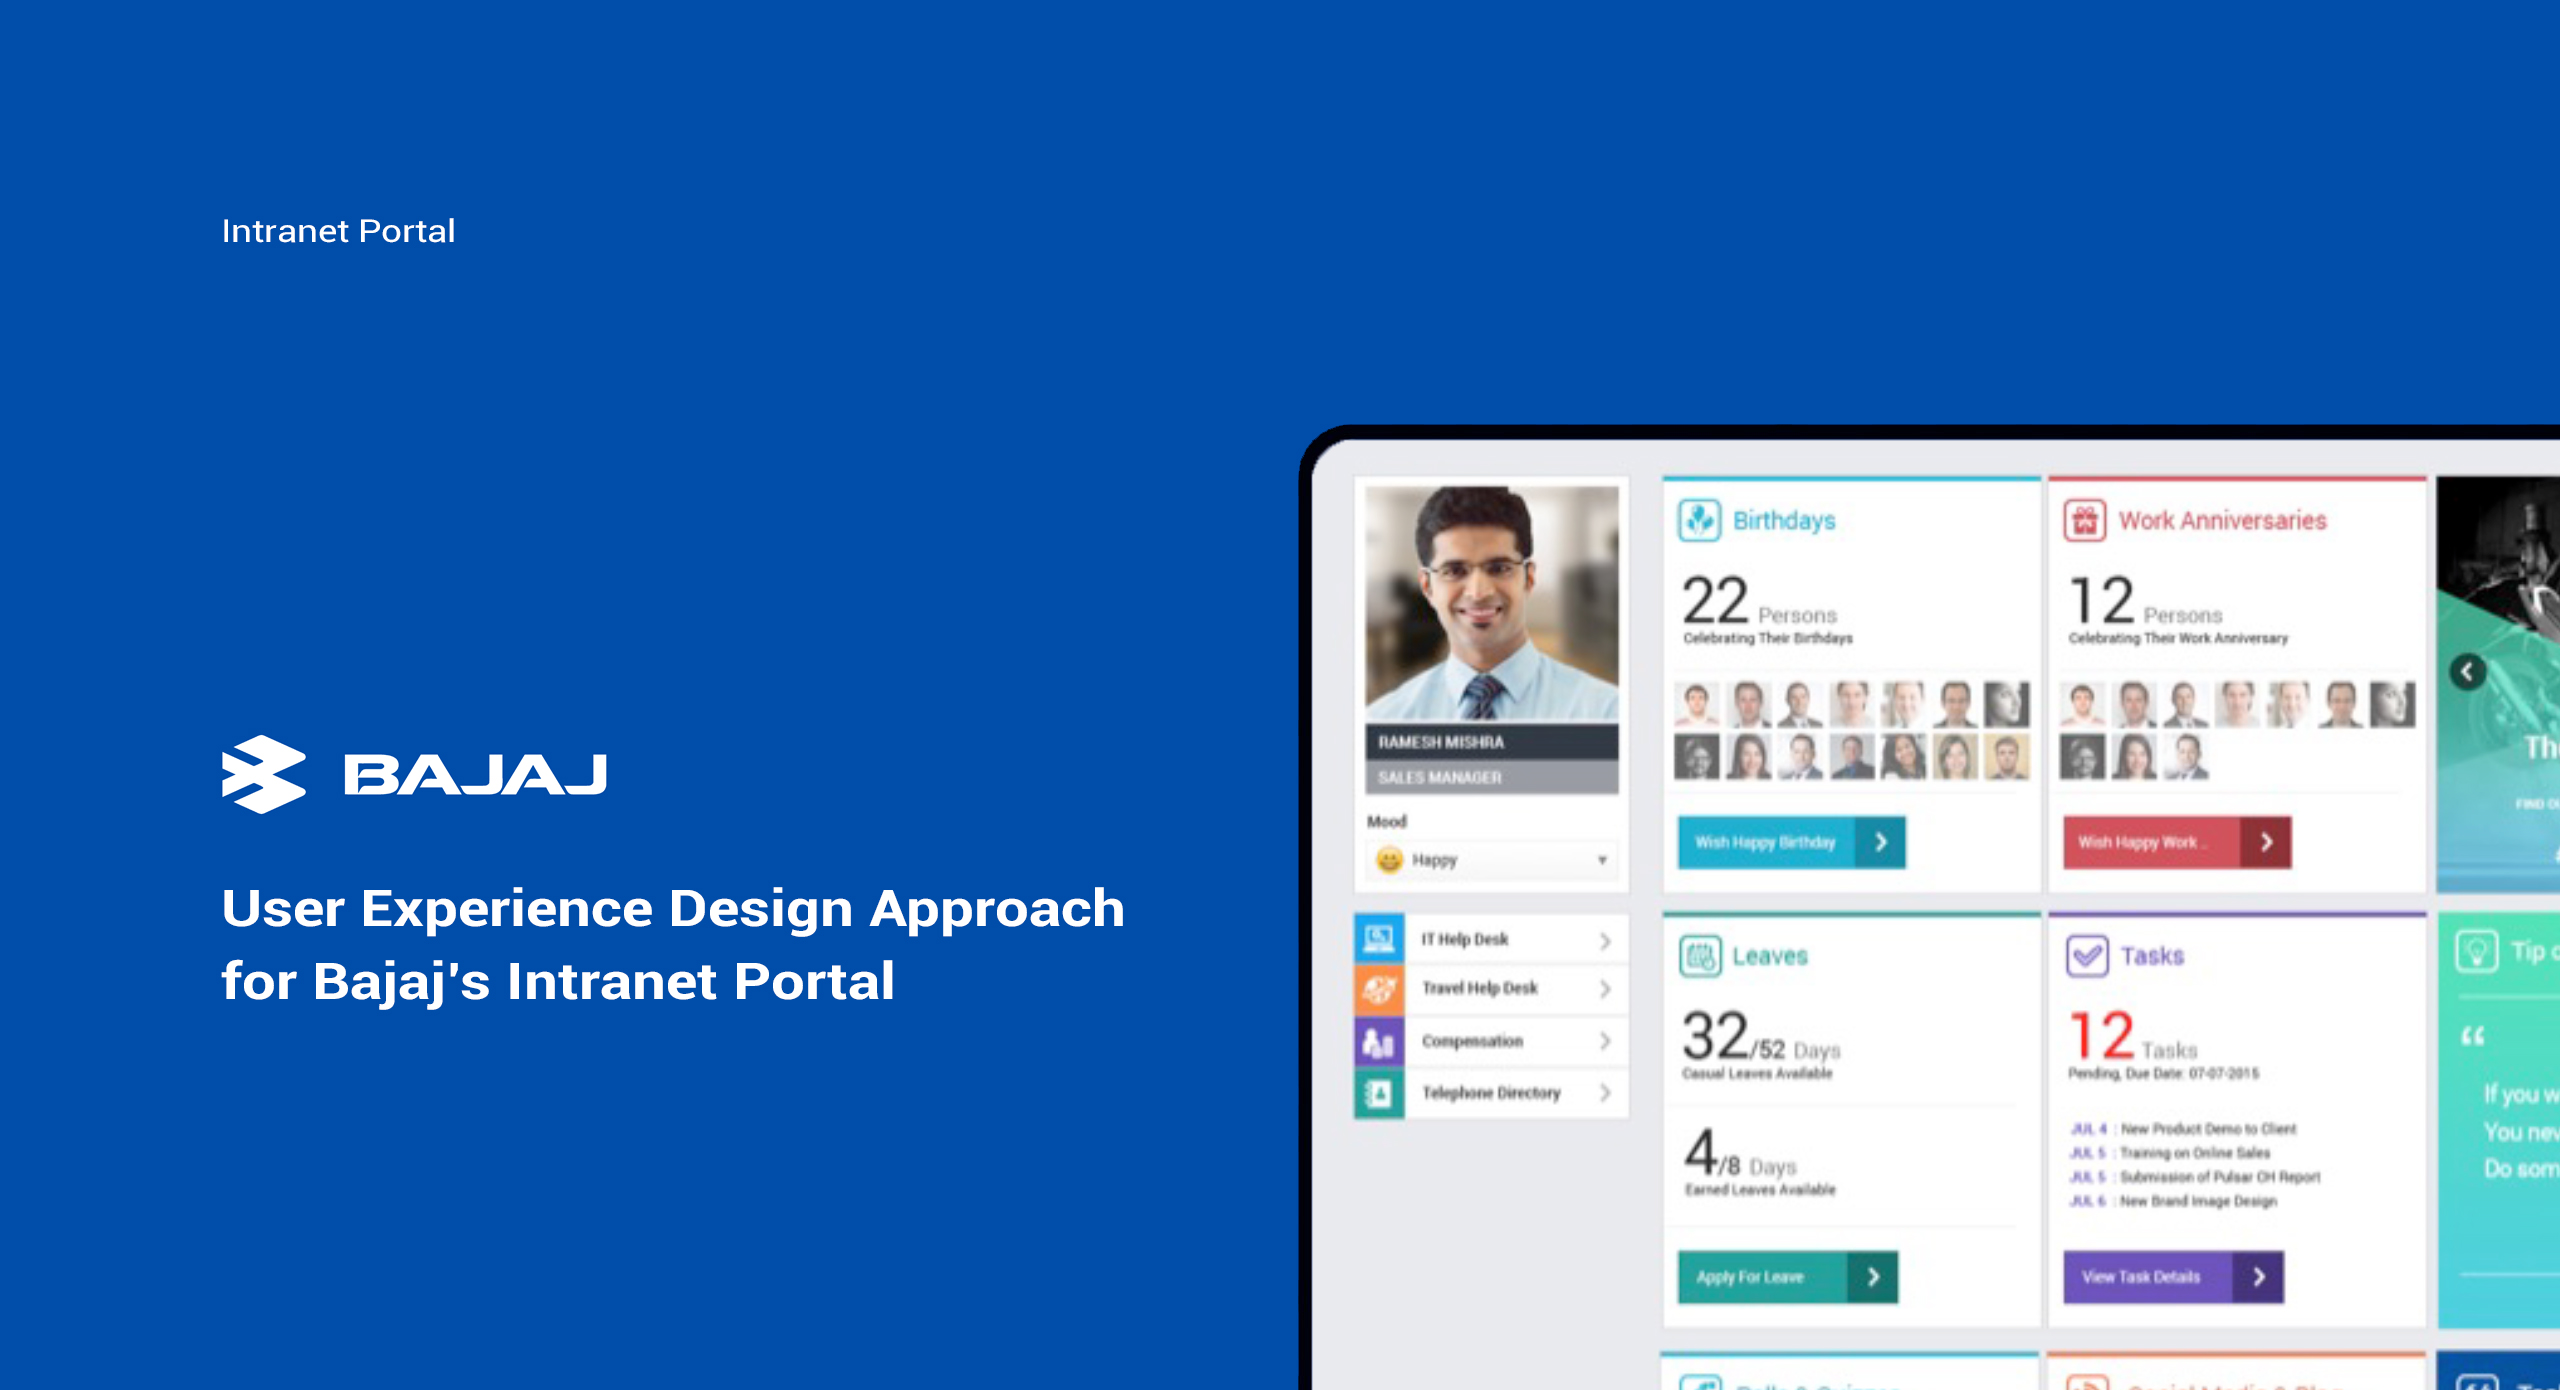 User Experience Design approach for Bajaj's Intranet Portal